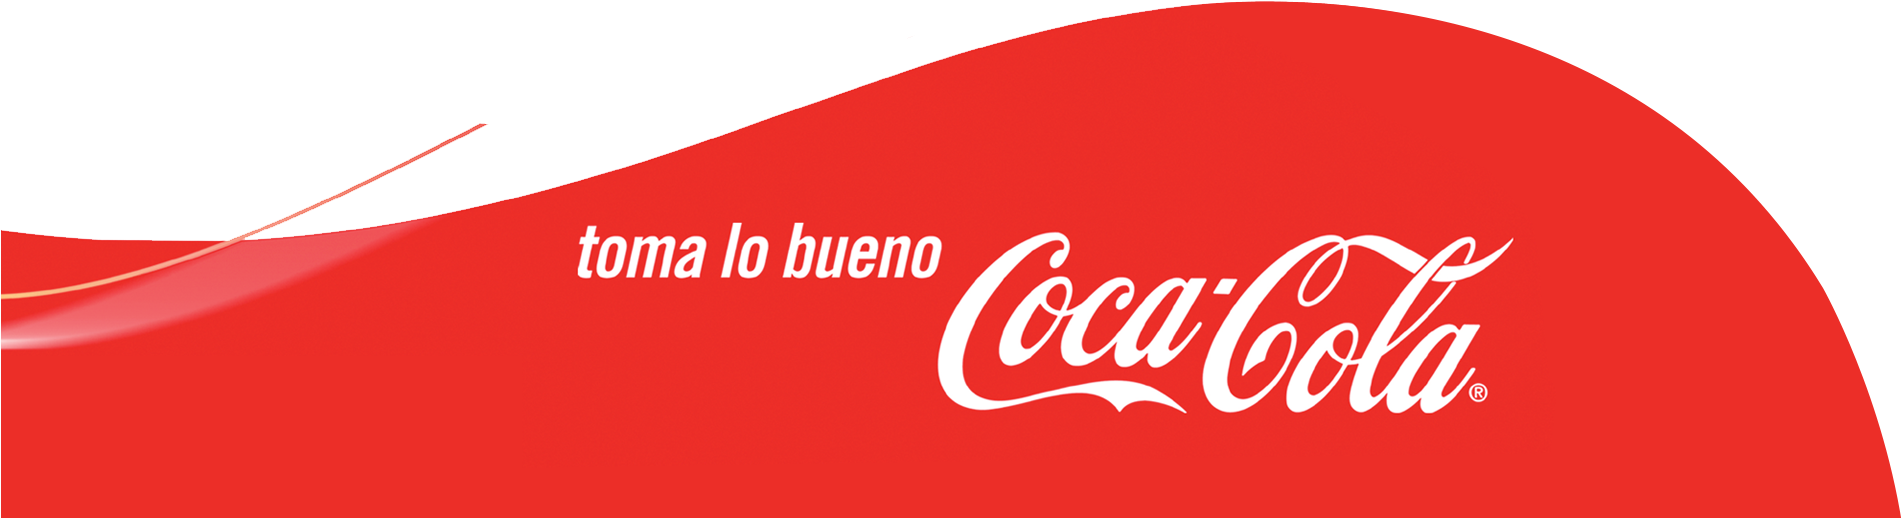 Coca Cola Logos Png Free Coca Cola Logo Transparent Background Images